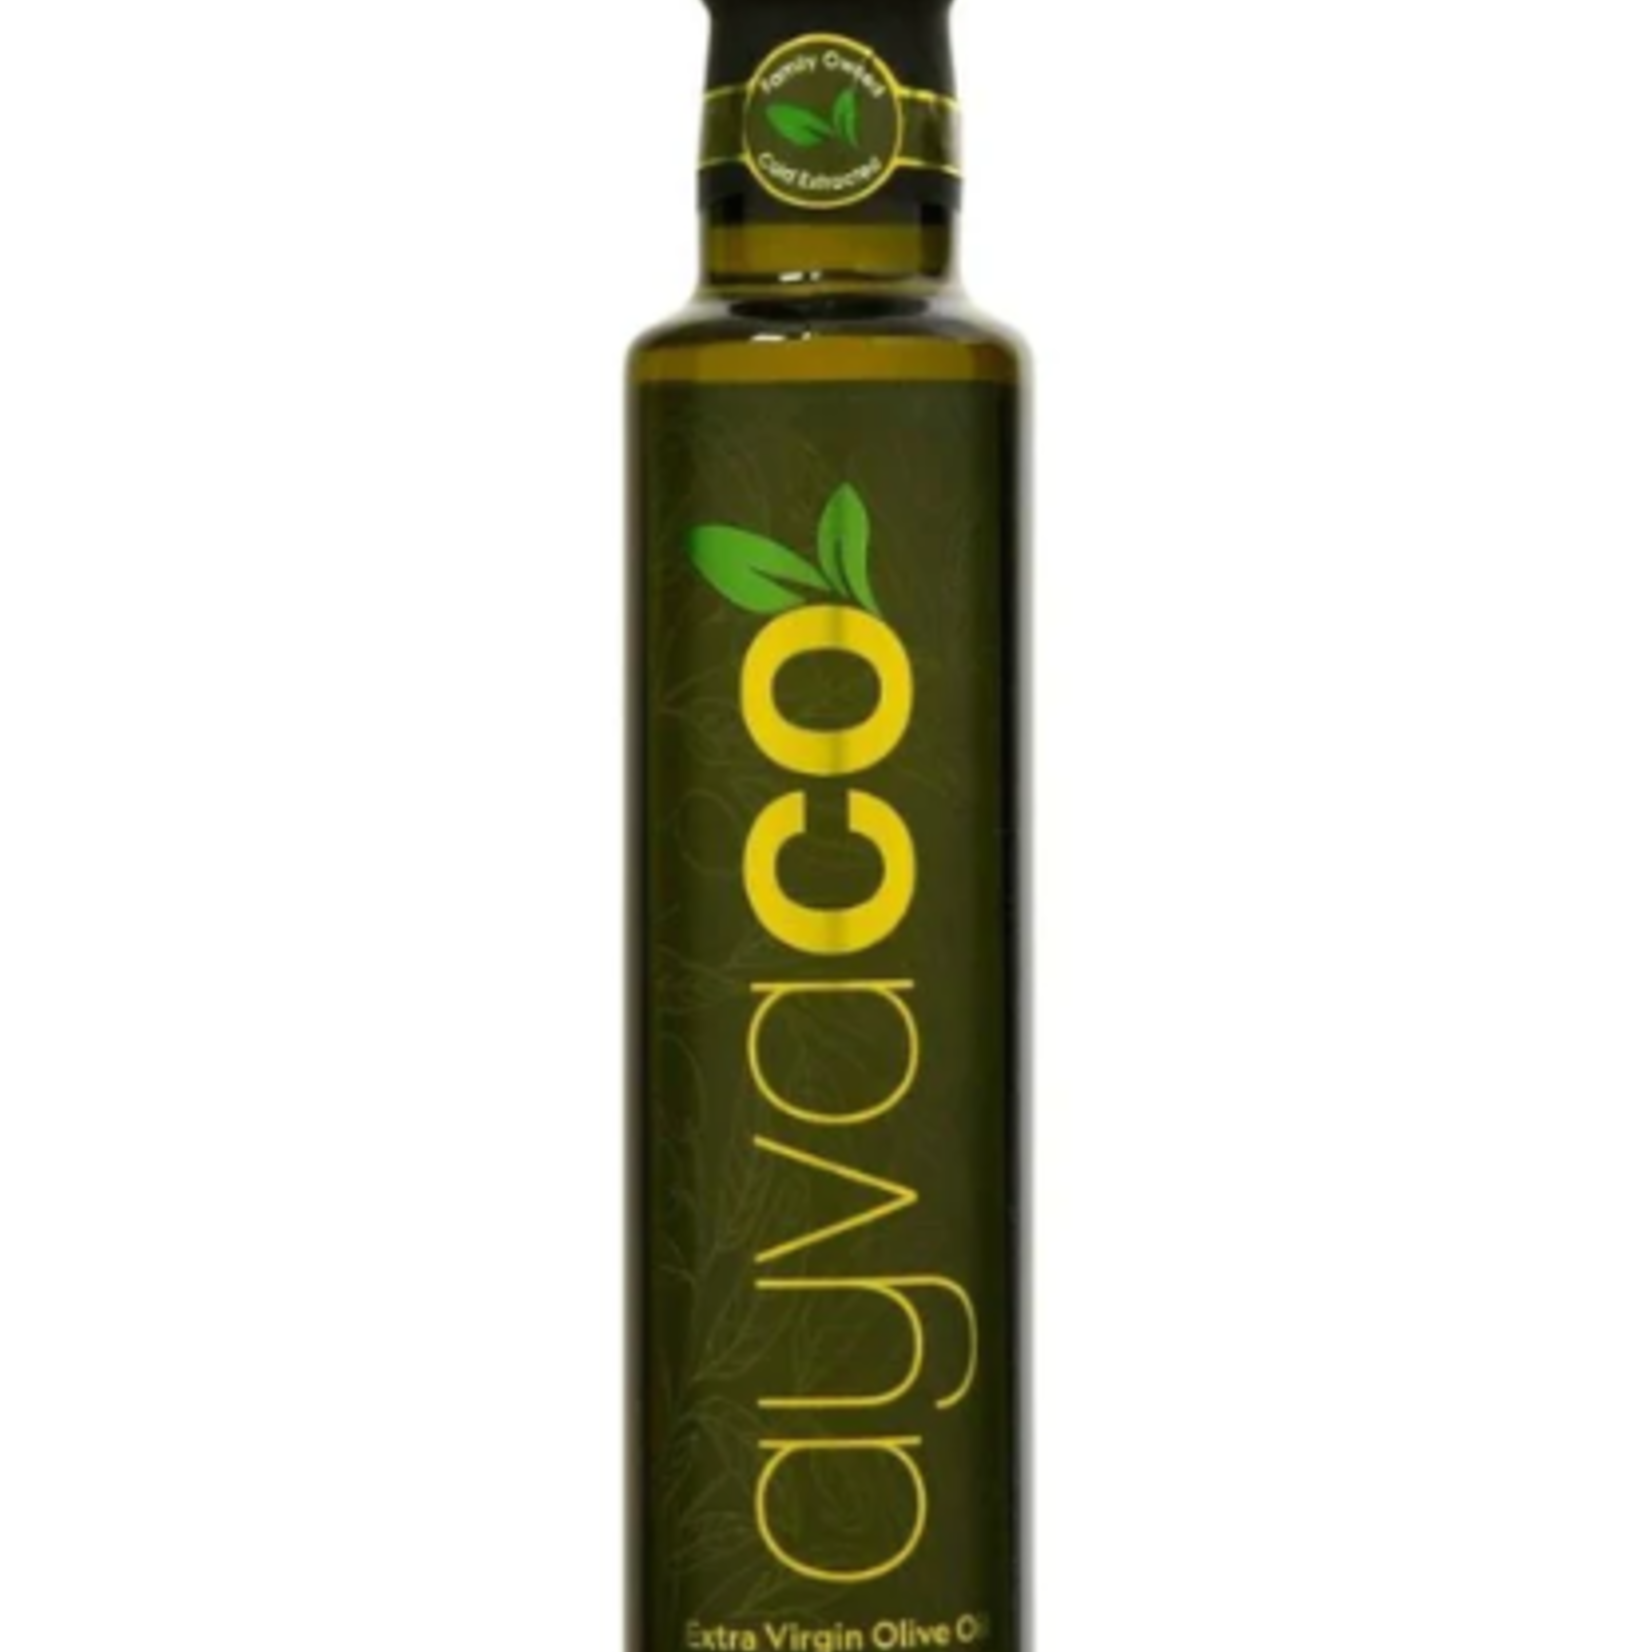 Ayvaco Olive Oil Ayvaco Extra Virgin Olive Oil - 250ml